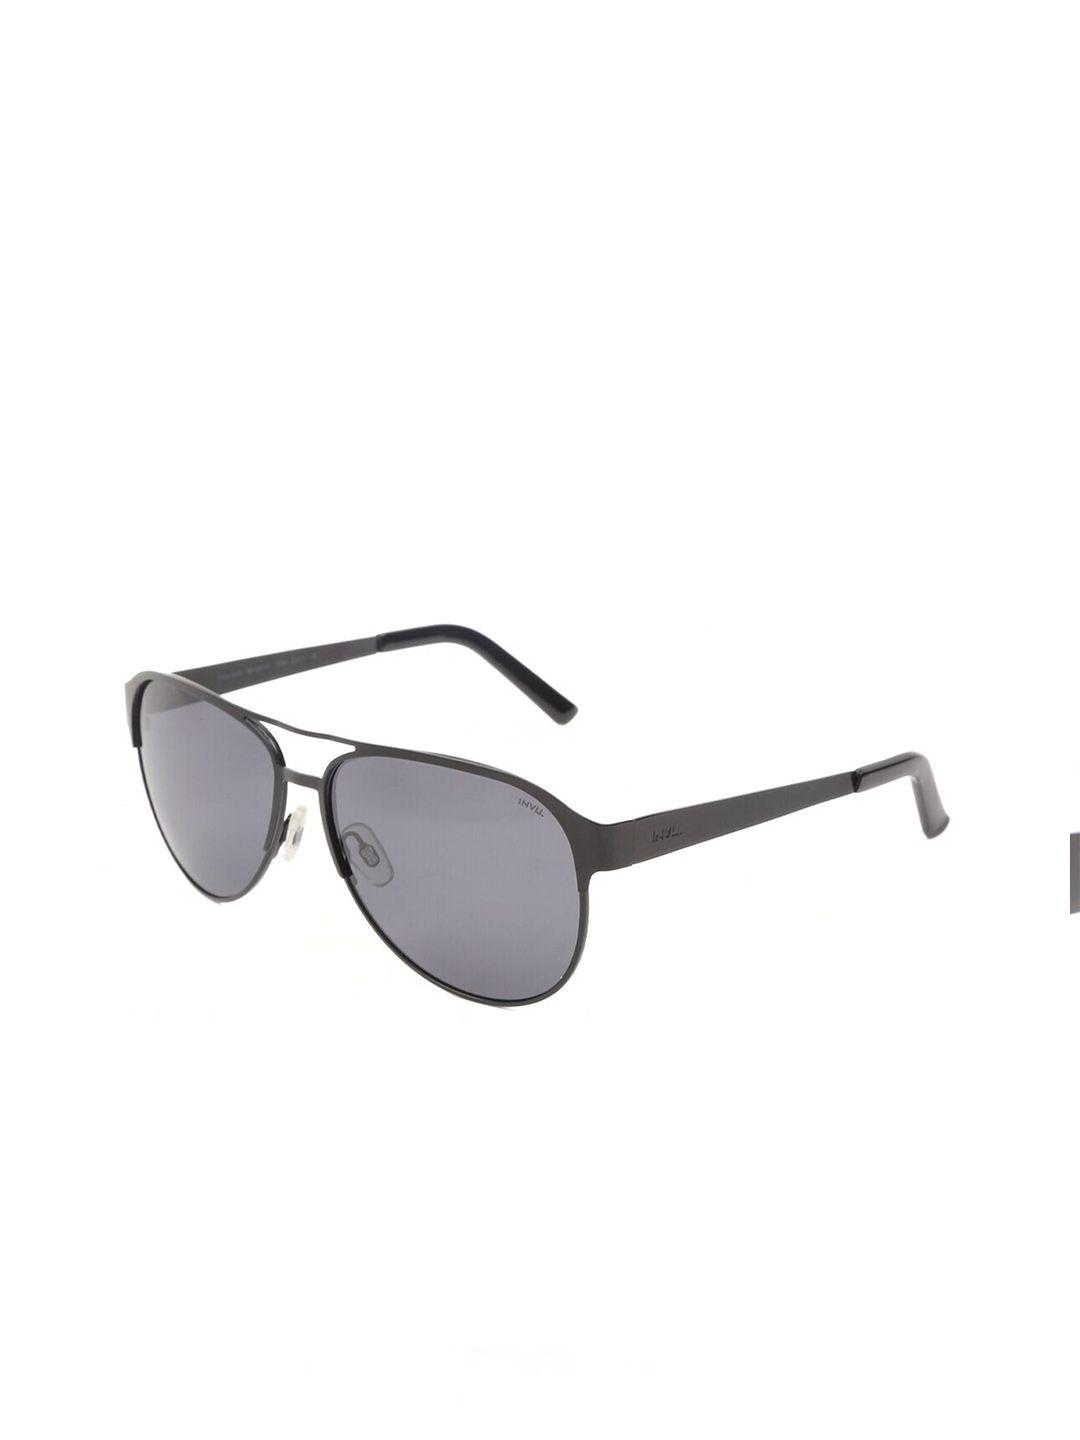 invu unisex aviator sunglasses with uv protected lens b1600a